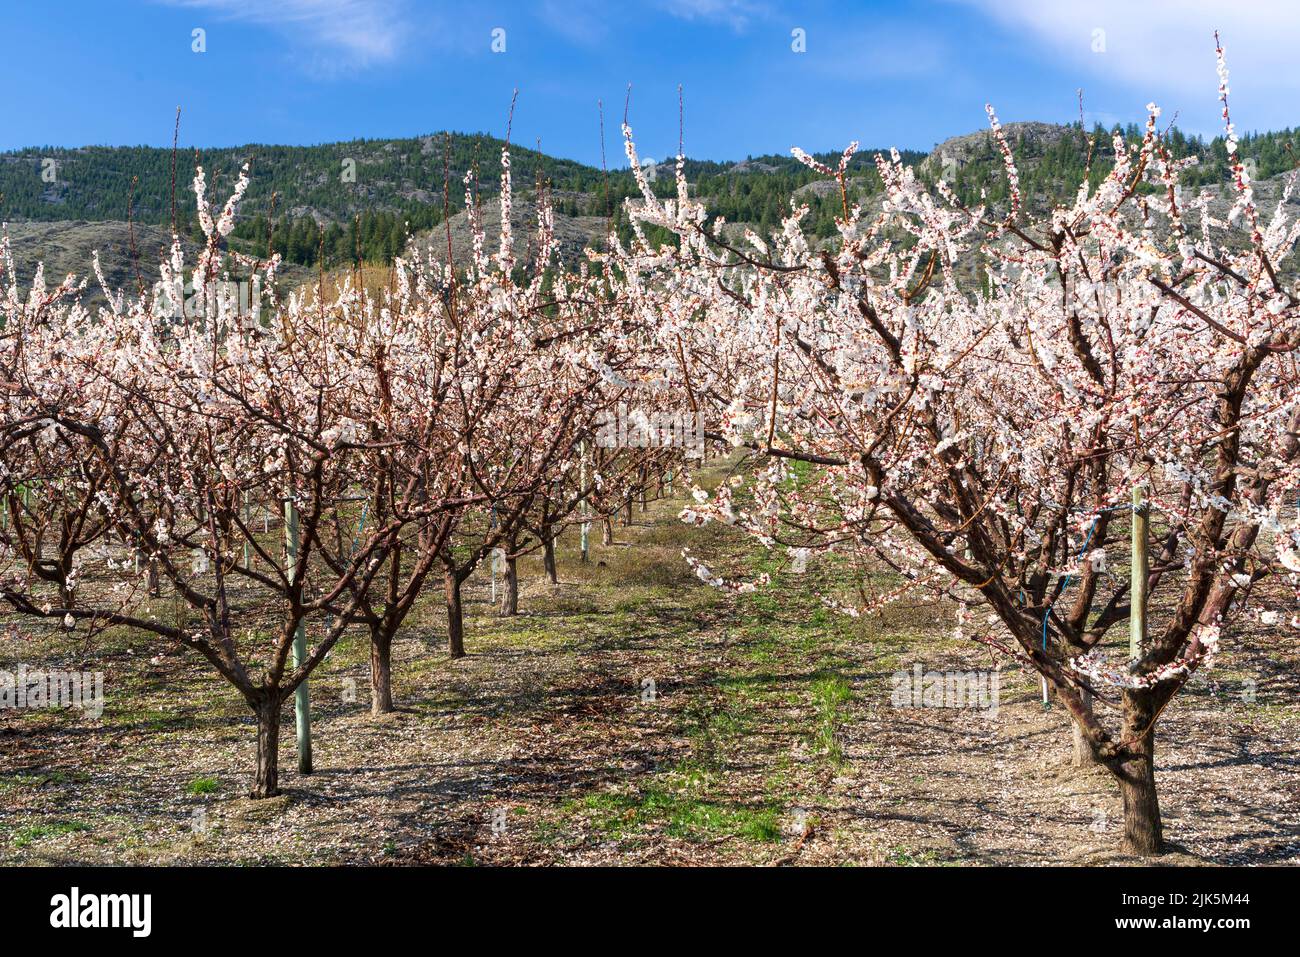 Apricot trees in bloom near Osooyos, Okanagan Valley, British Columbia, Canada. Stock Photo